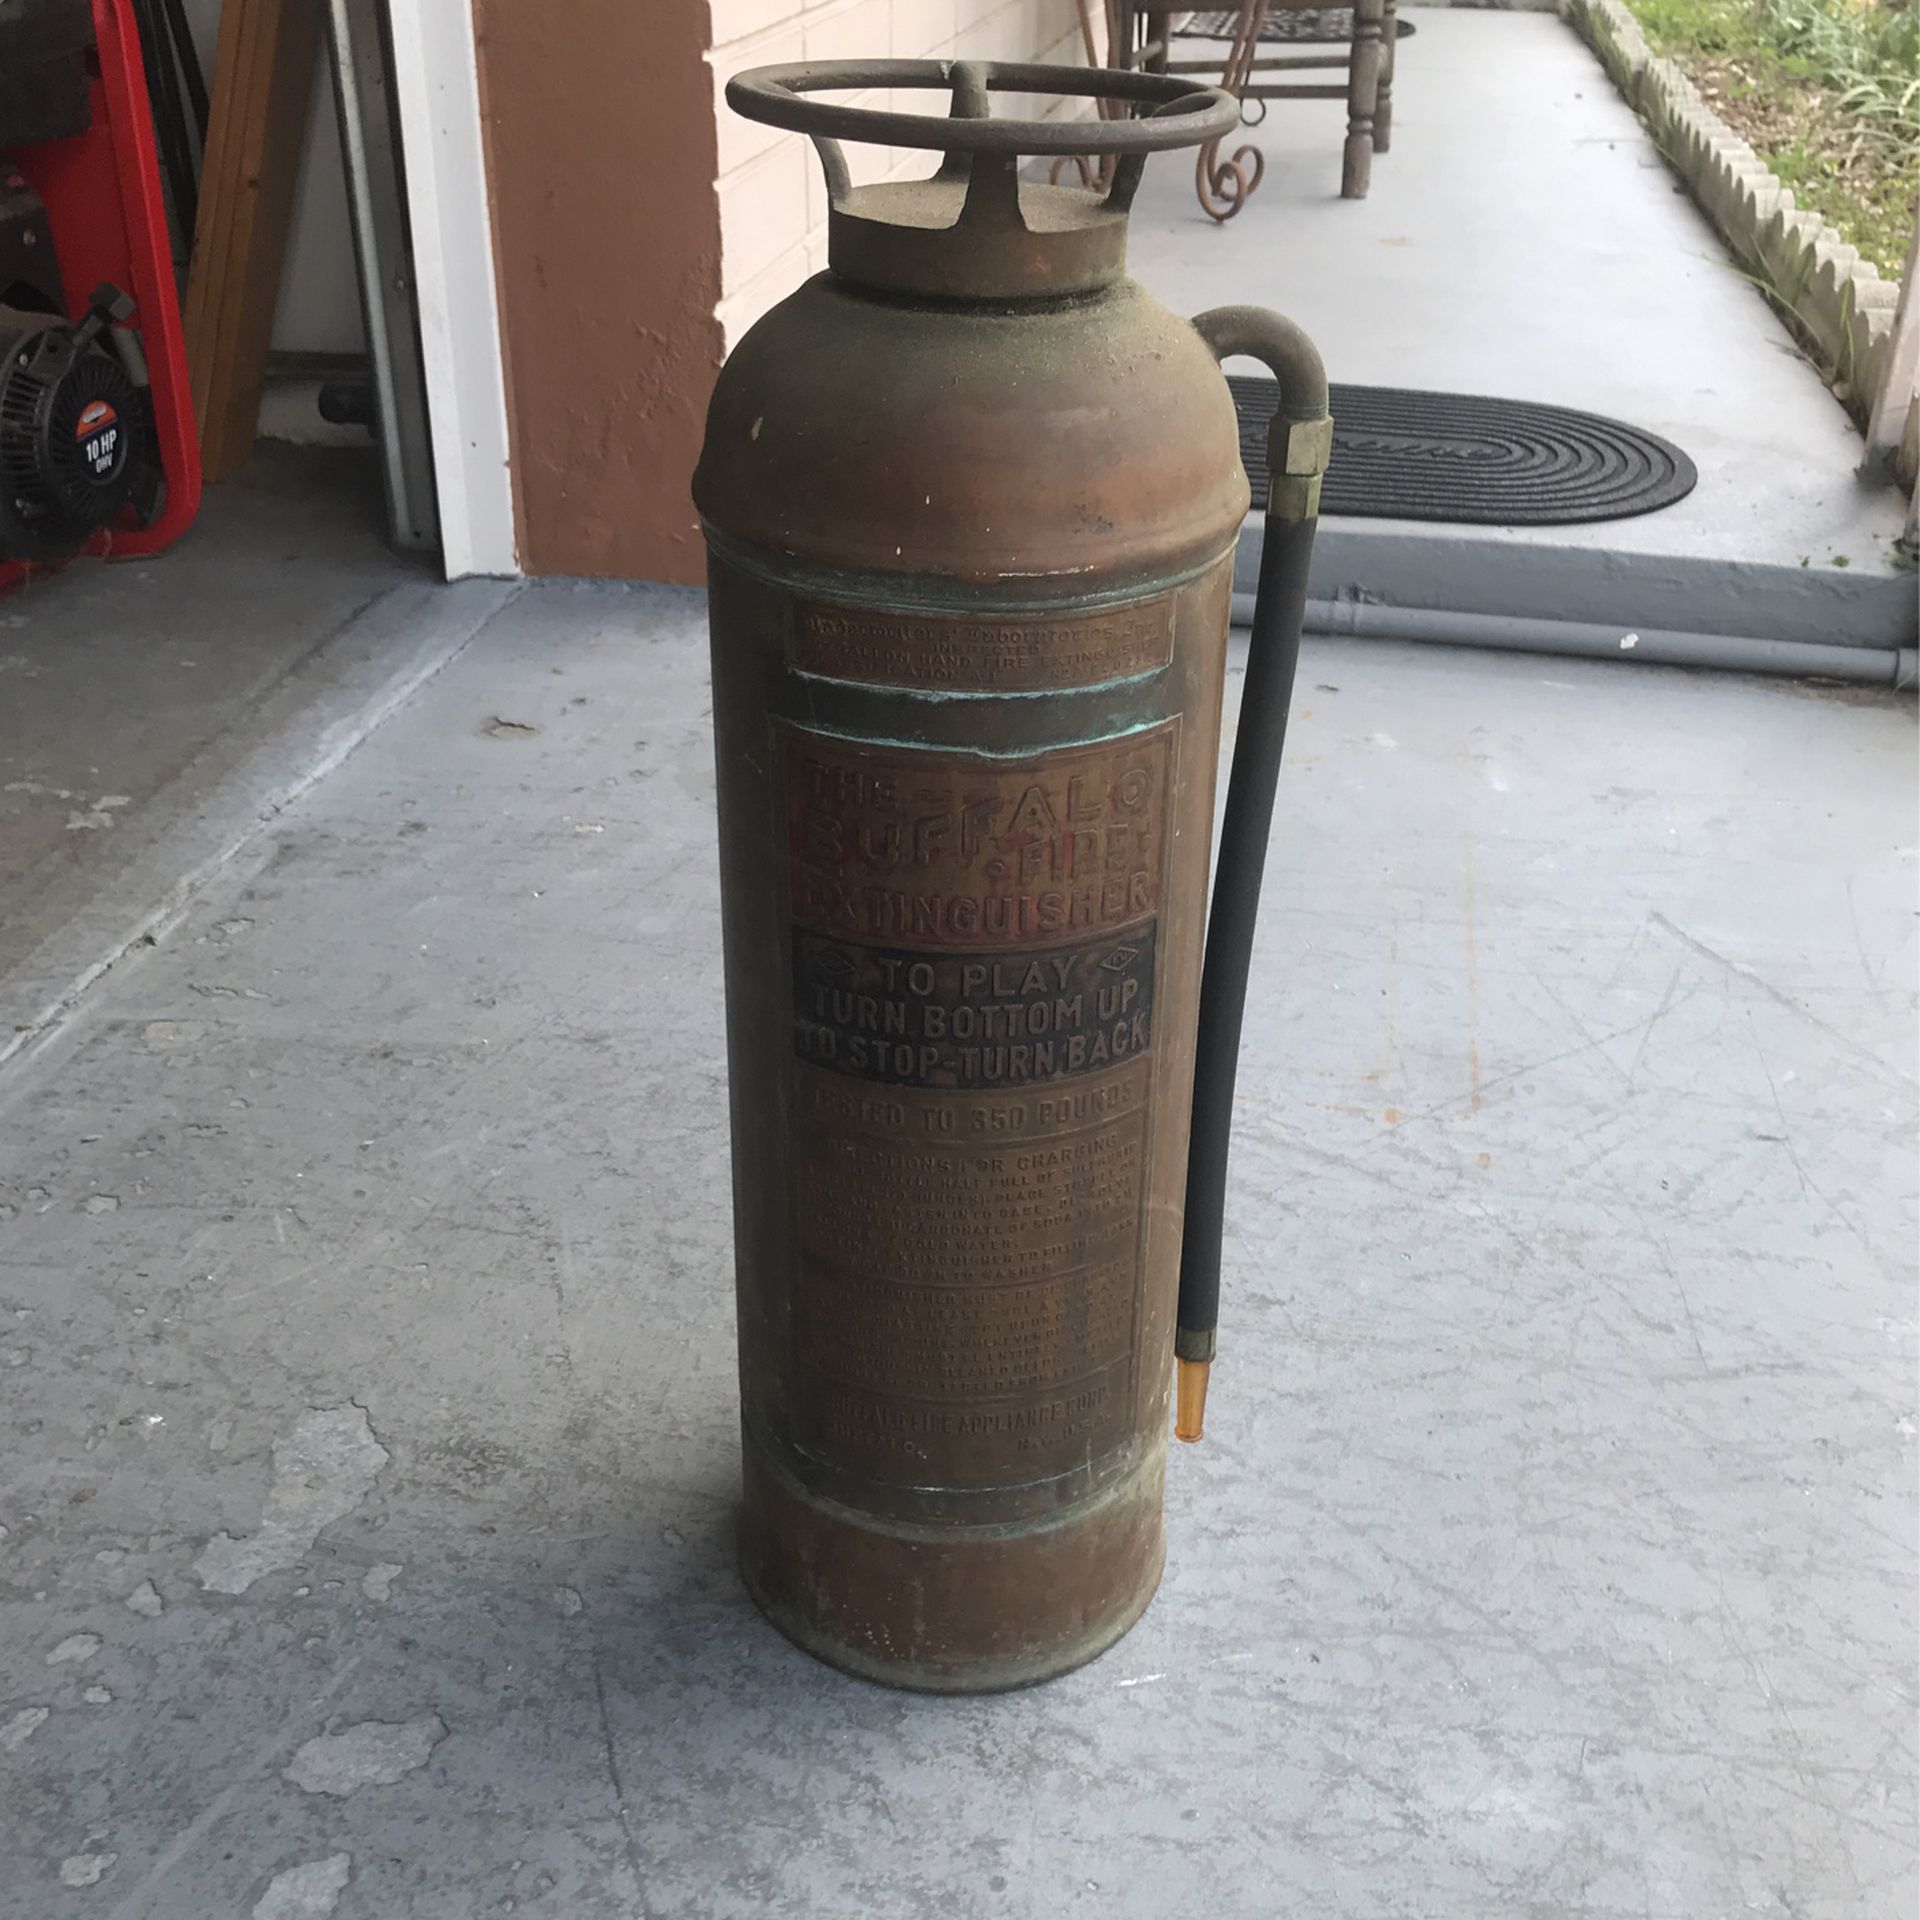 The Buffalo Fire Extinguisher 